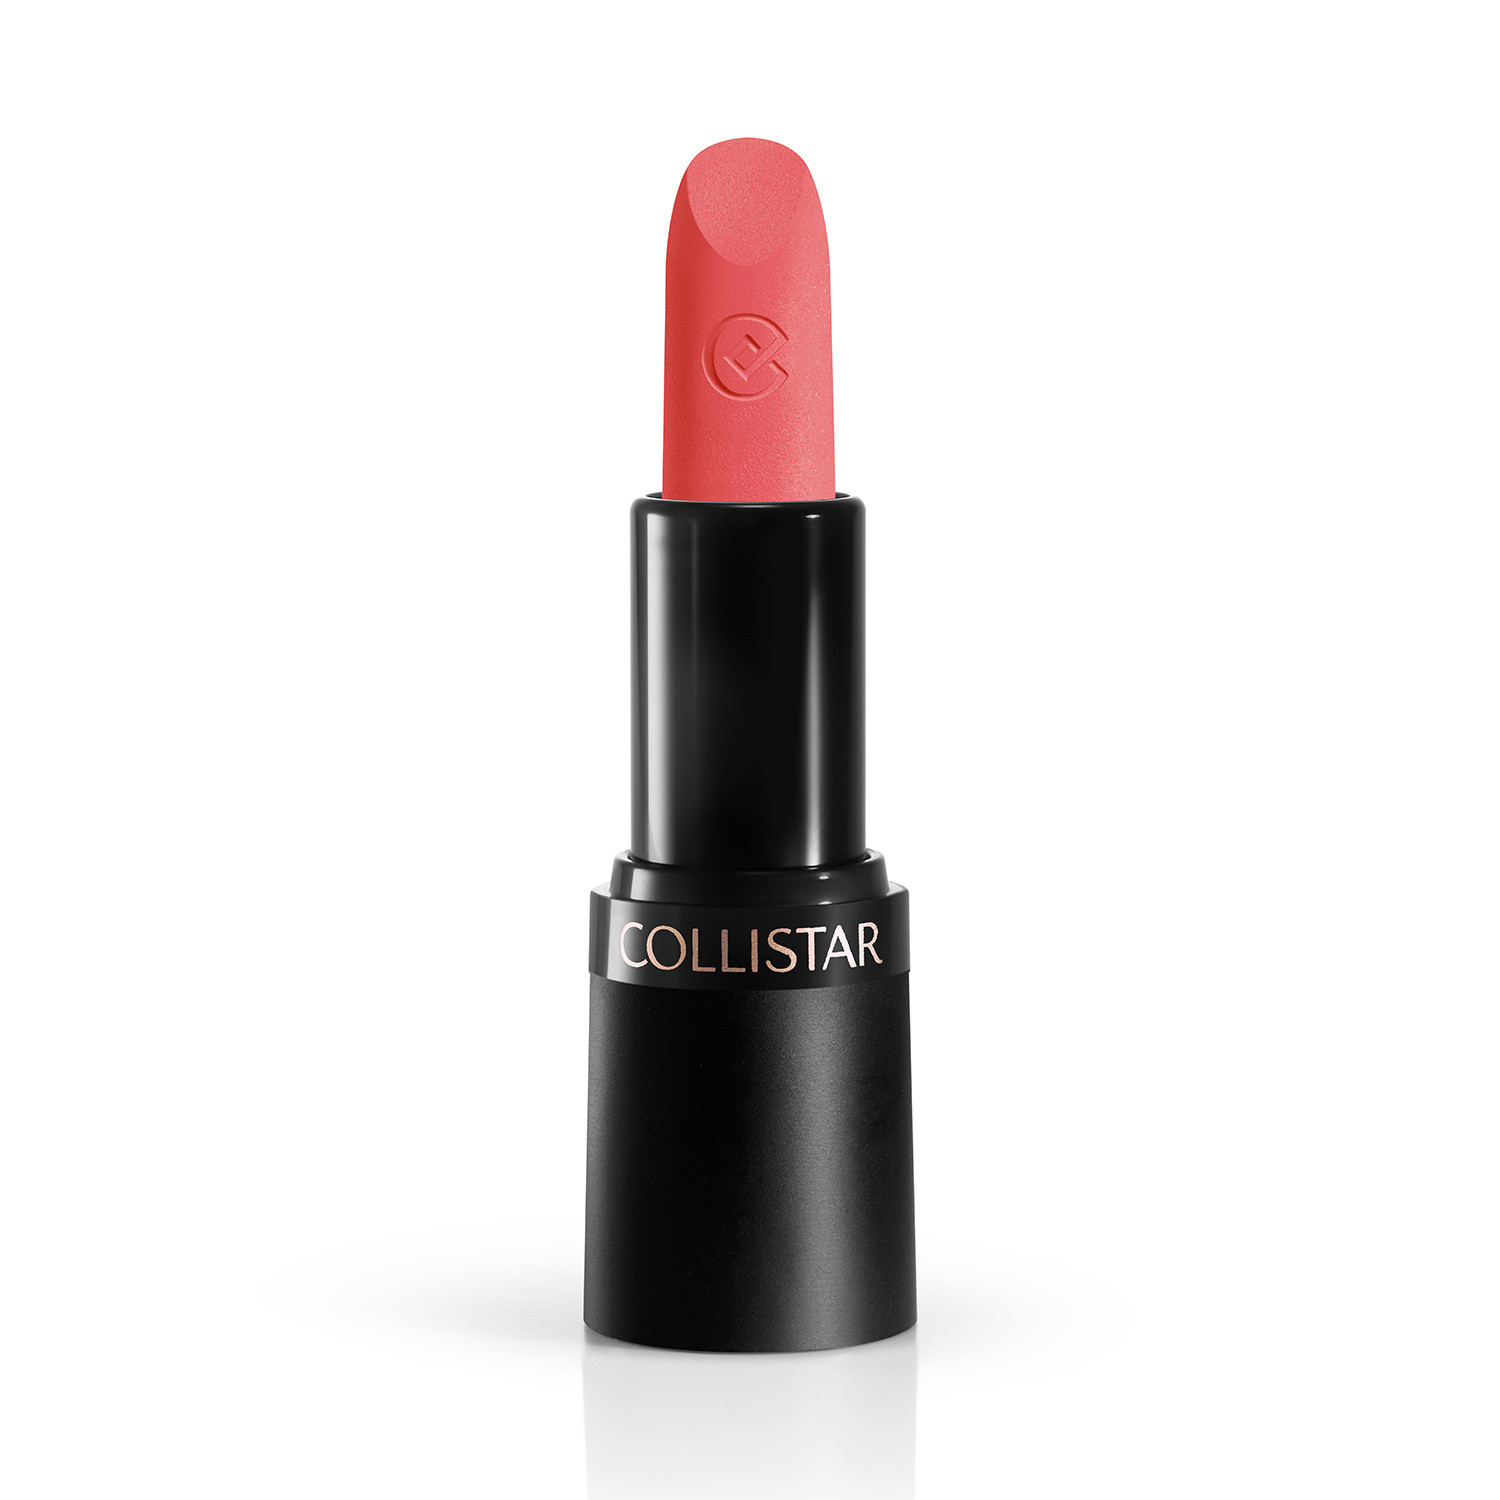 Collistar - Pure matte lipstick - 102 Rosa Antico, Antique Pink, large image number 0